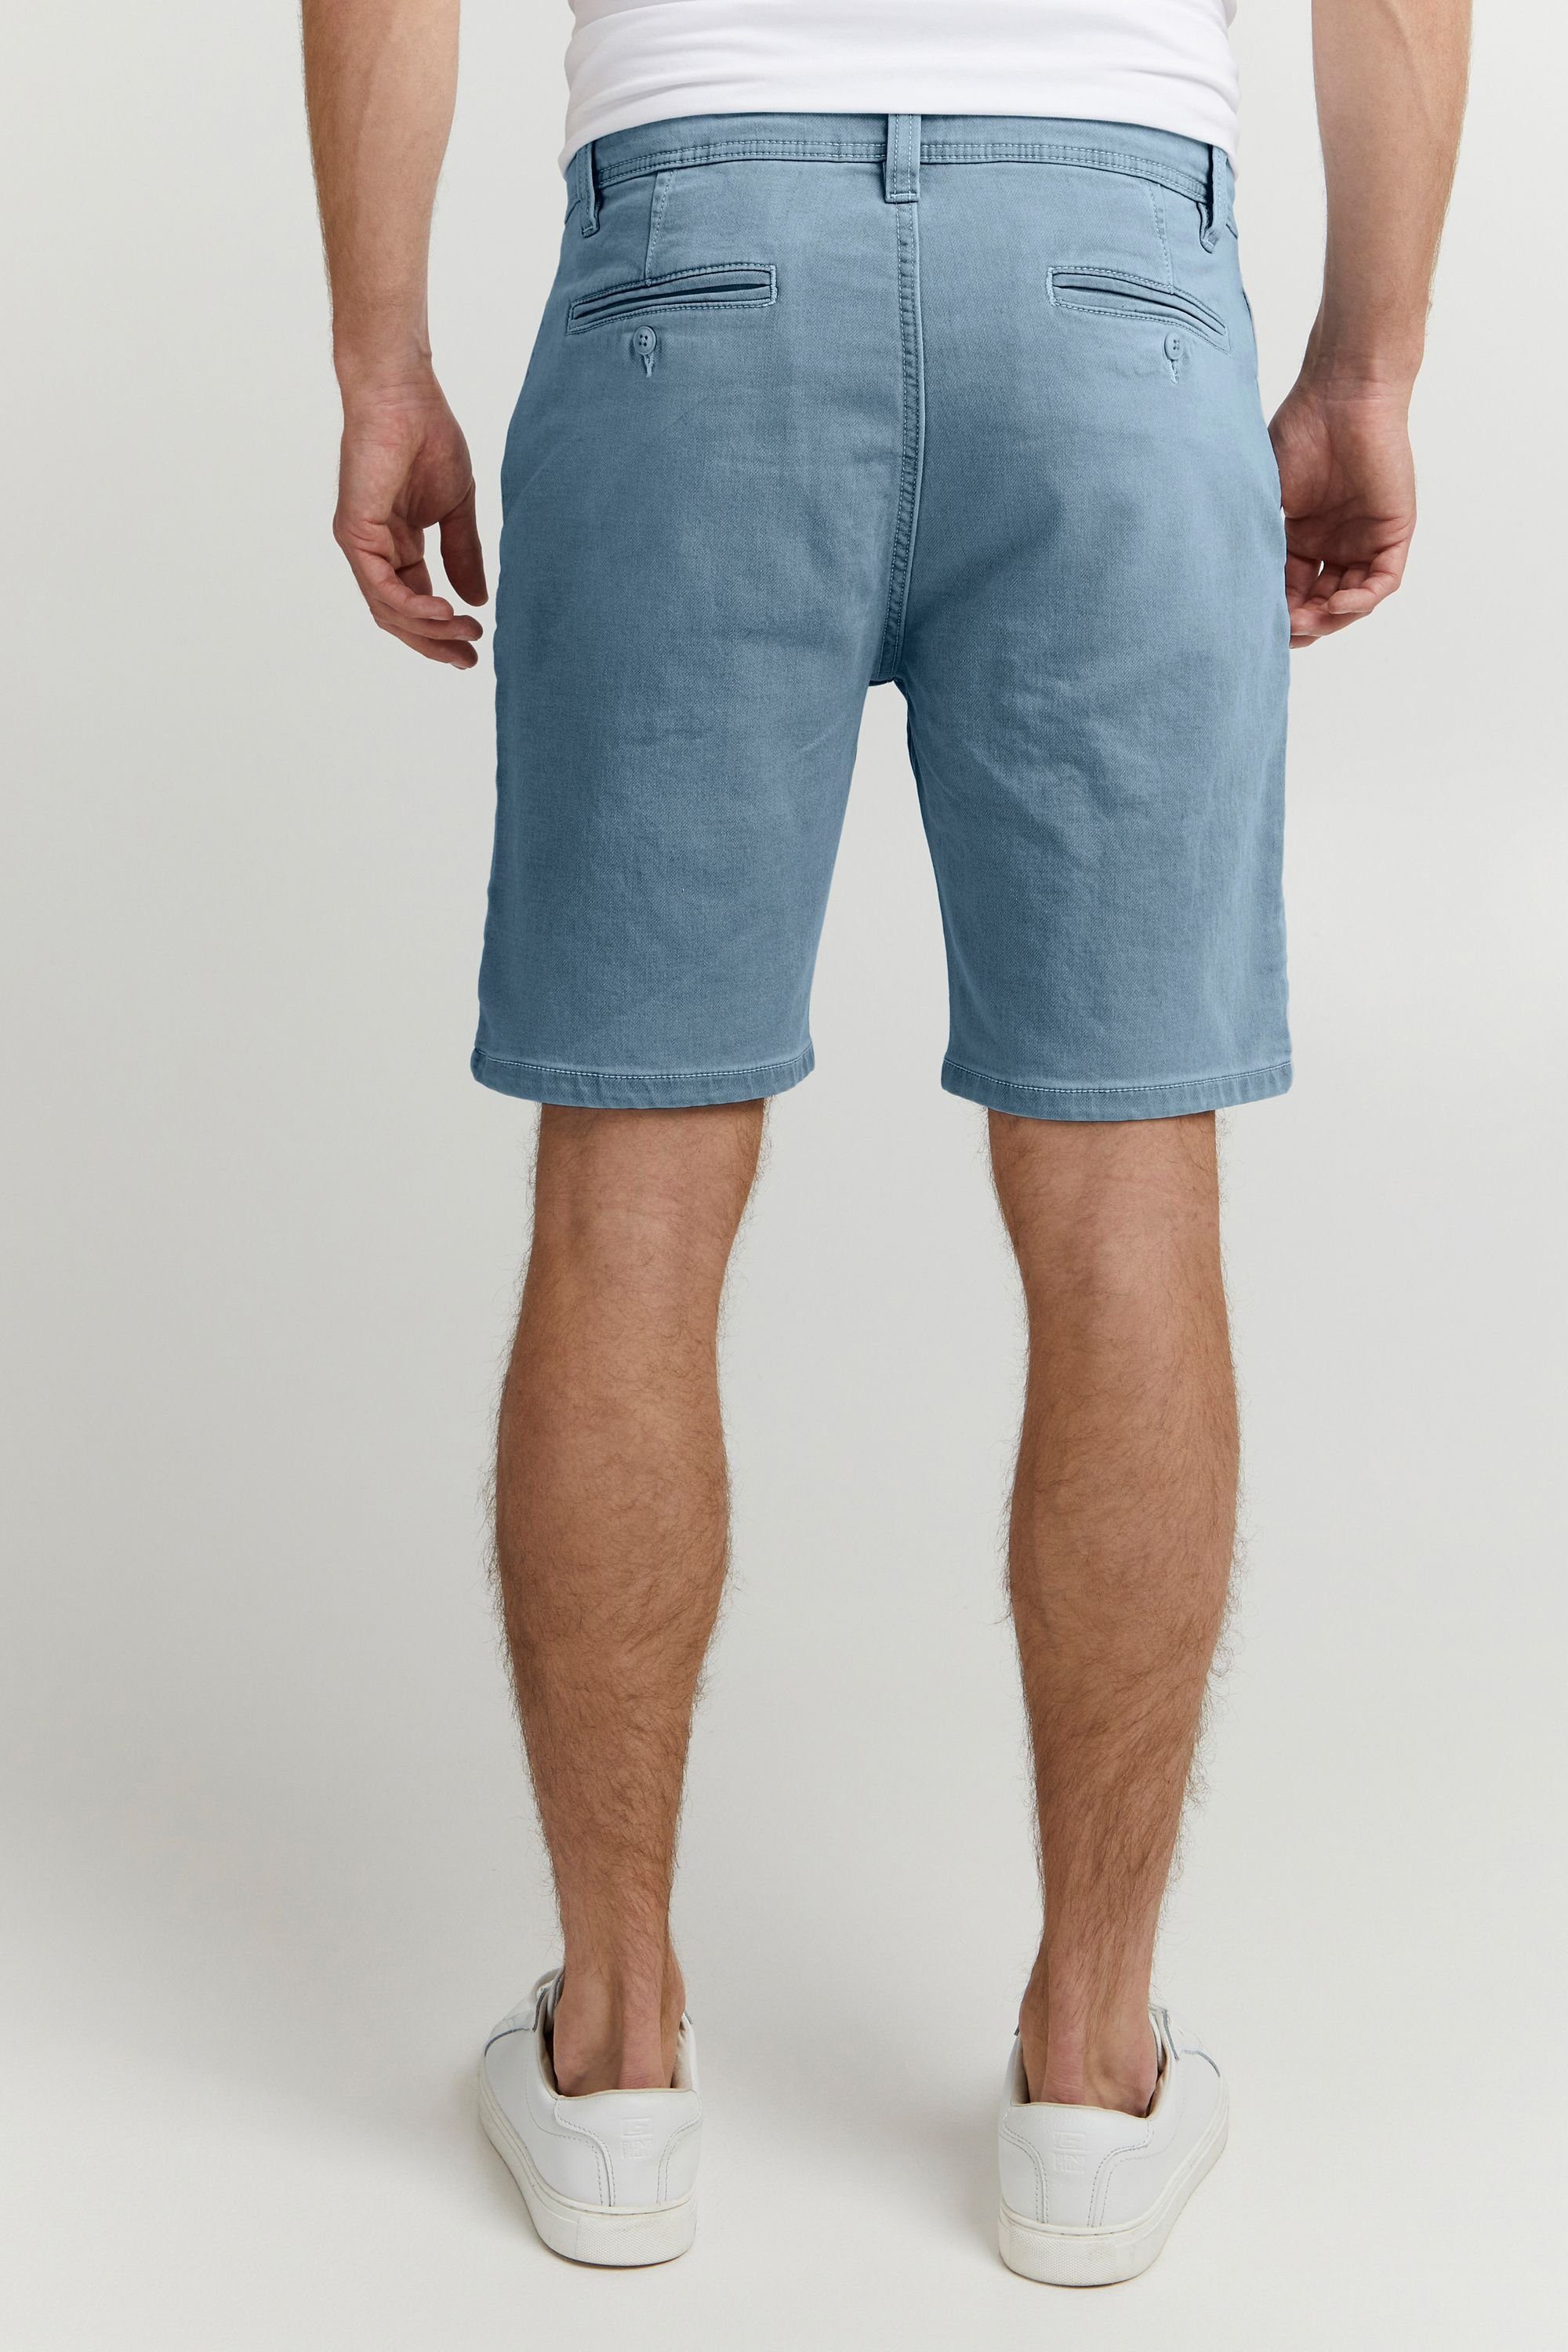 Blue Shorts Indicode (939) IDGodo Dim